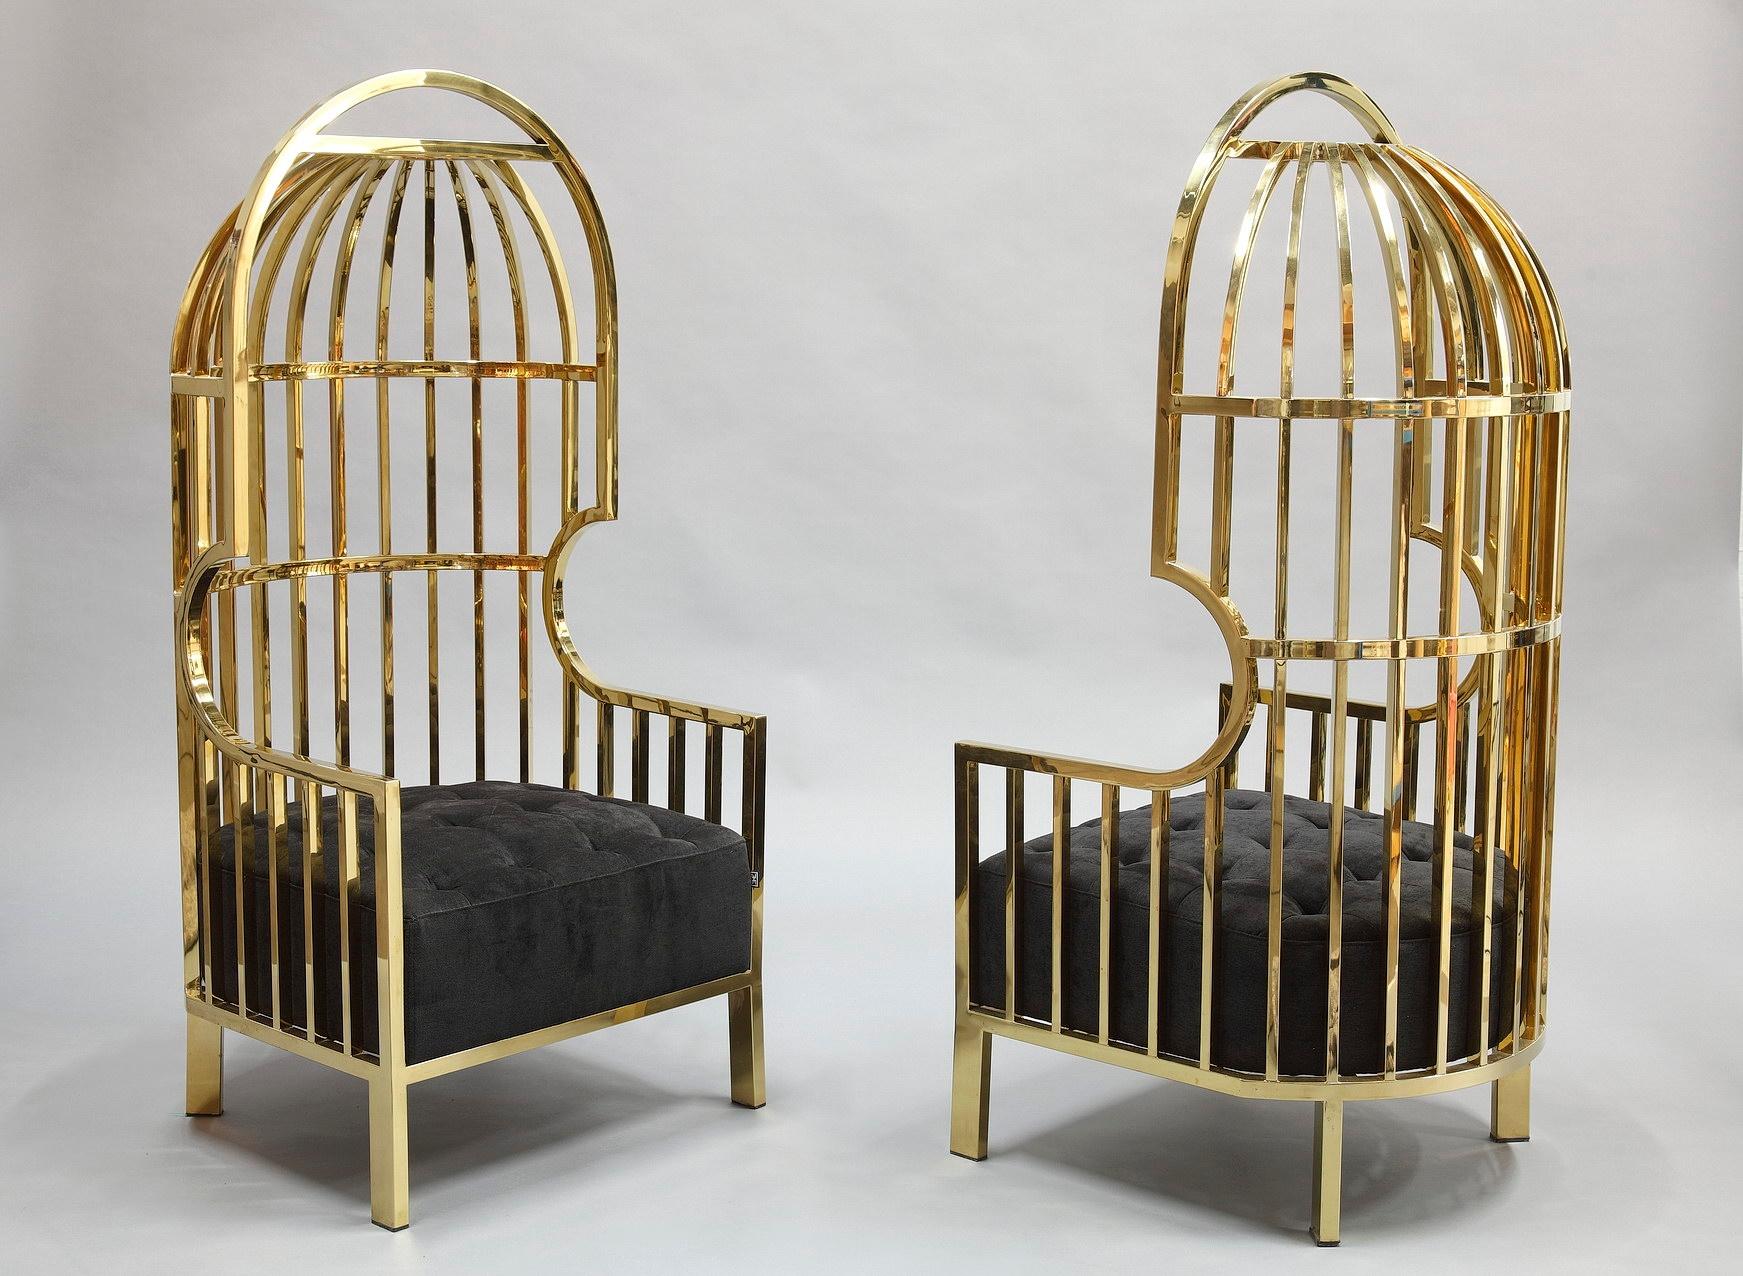 birdcage chair gold